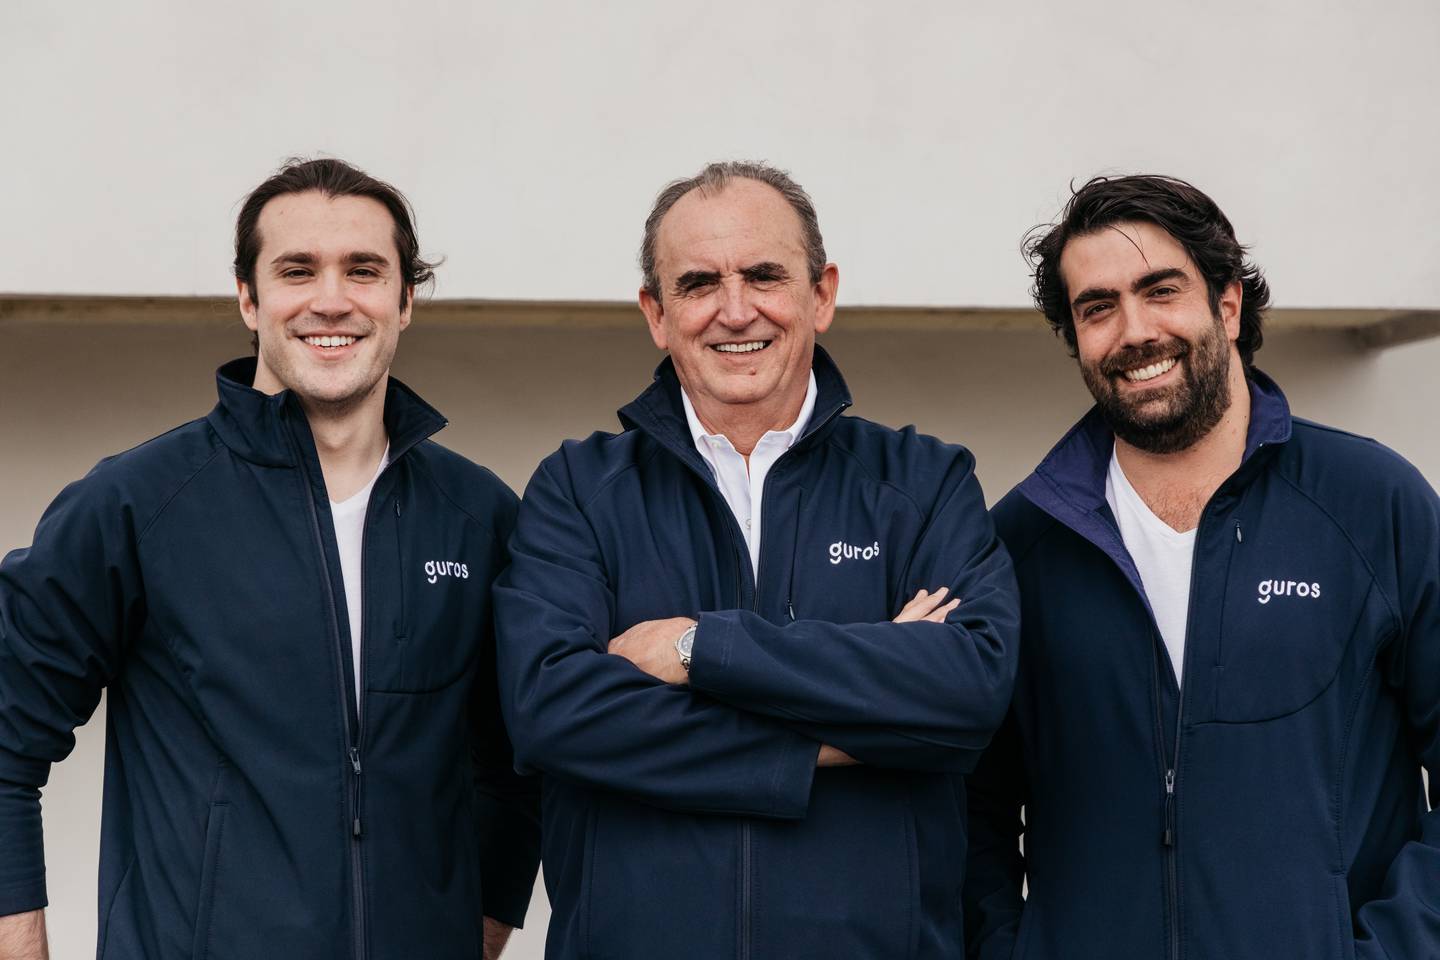 Guros' founders Javier Gironella, Juan Gironella y Juan Ma Gironella.